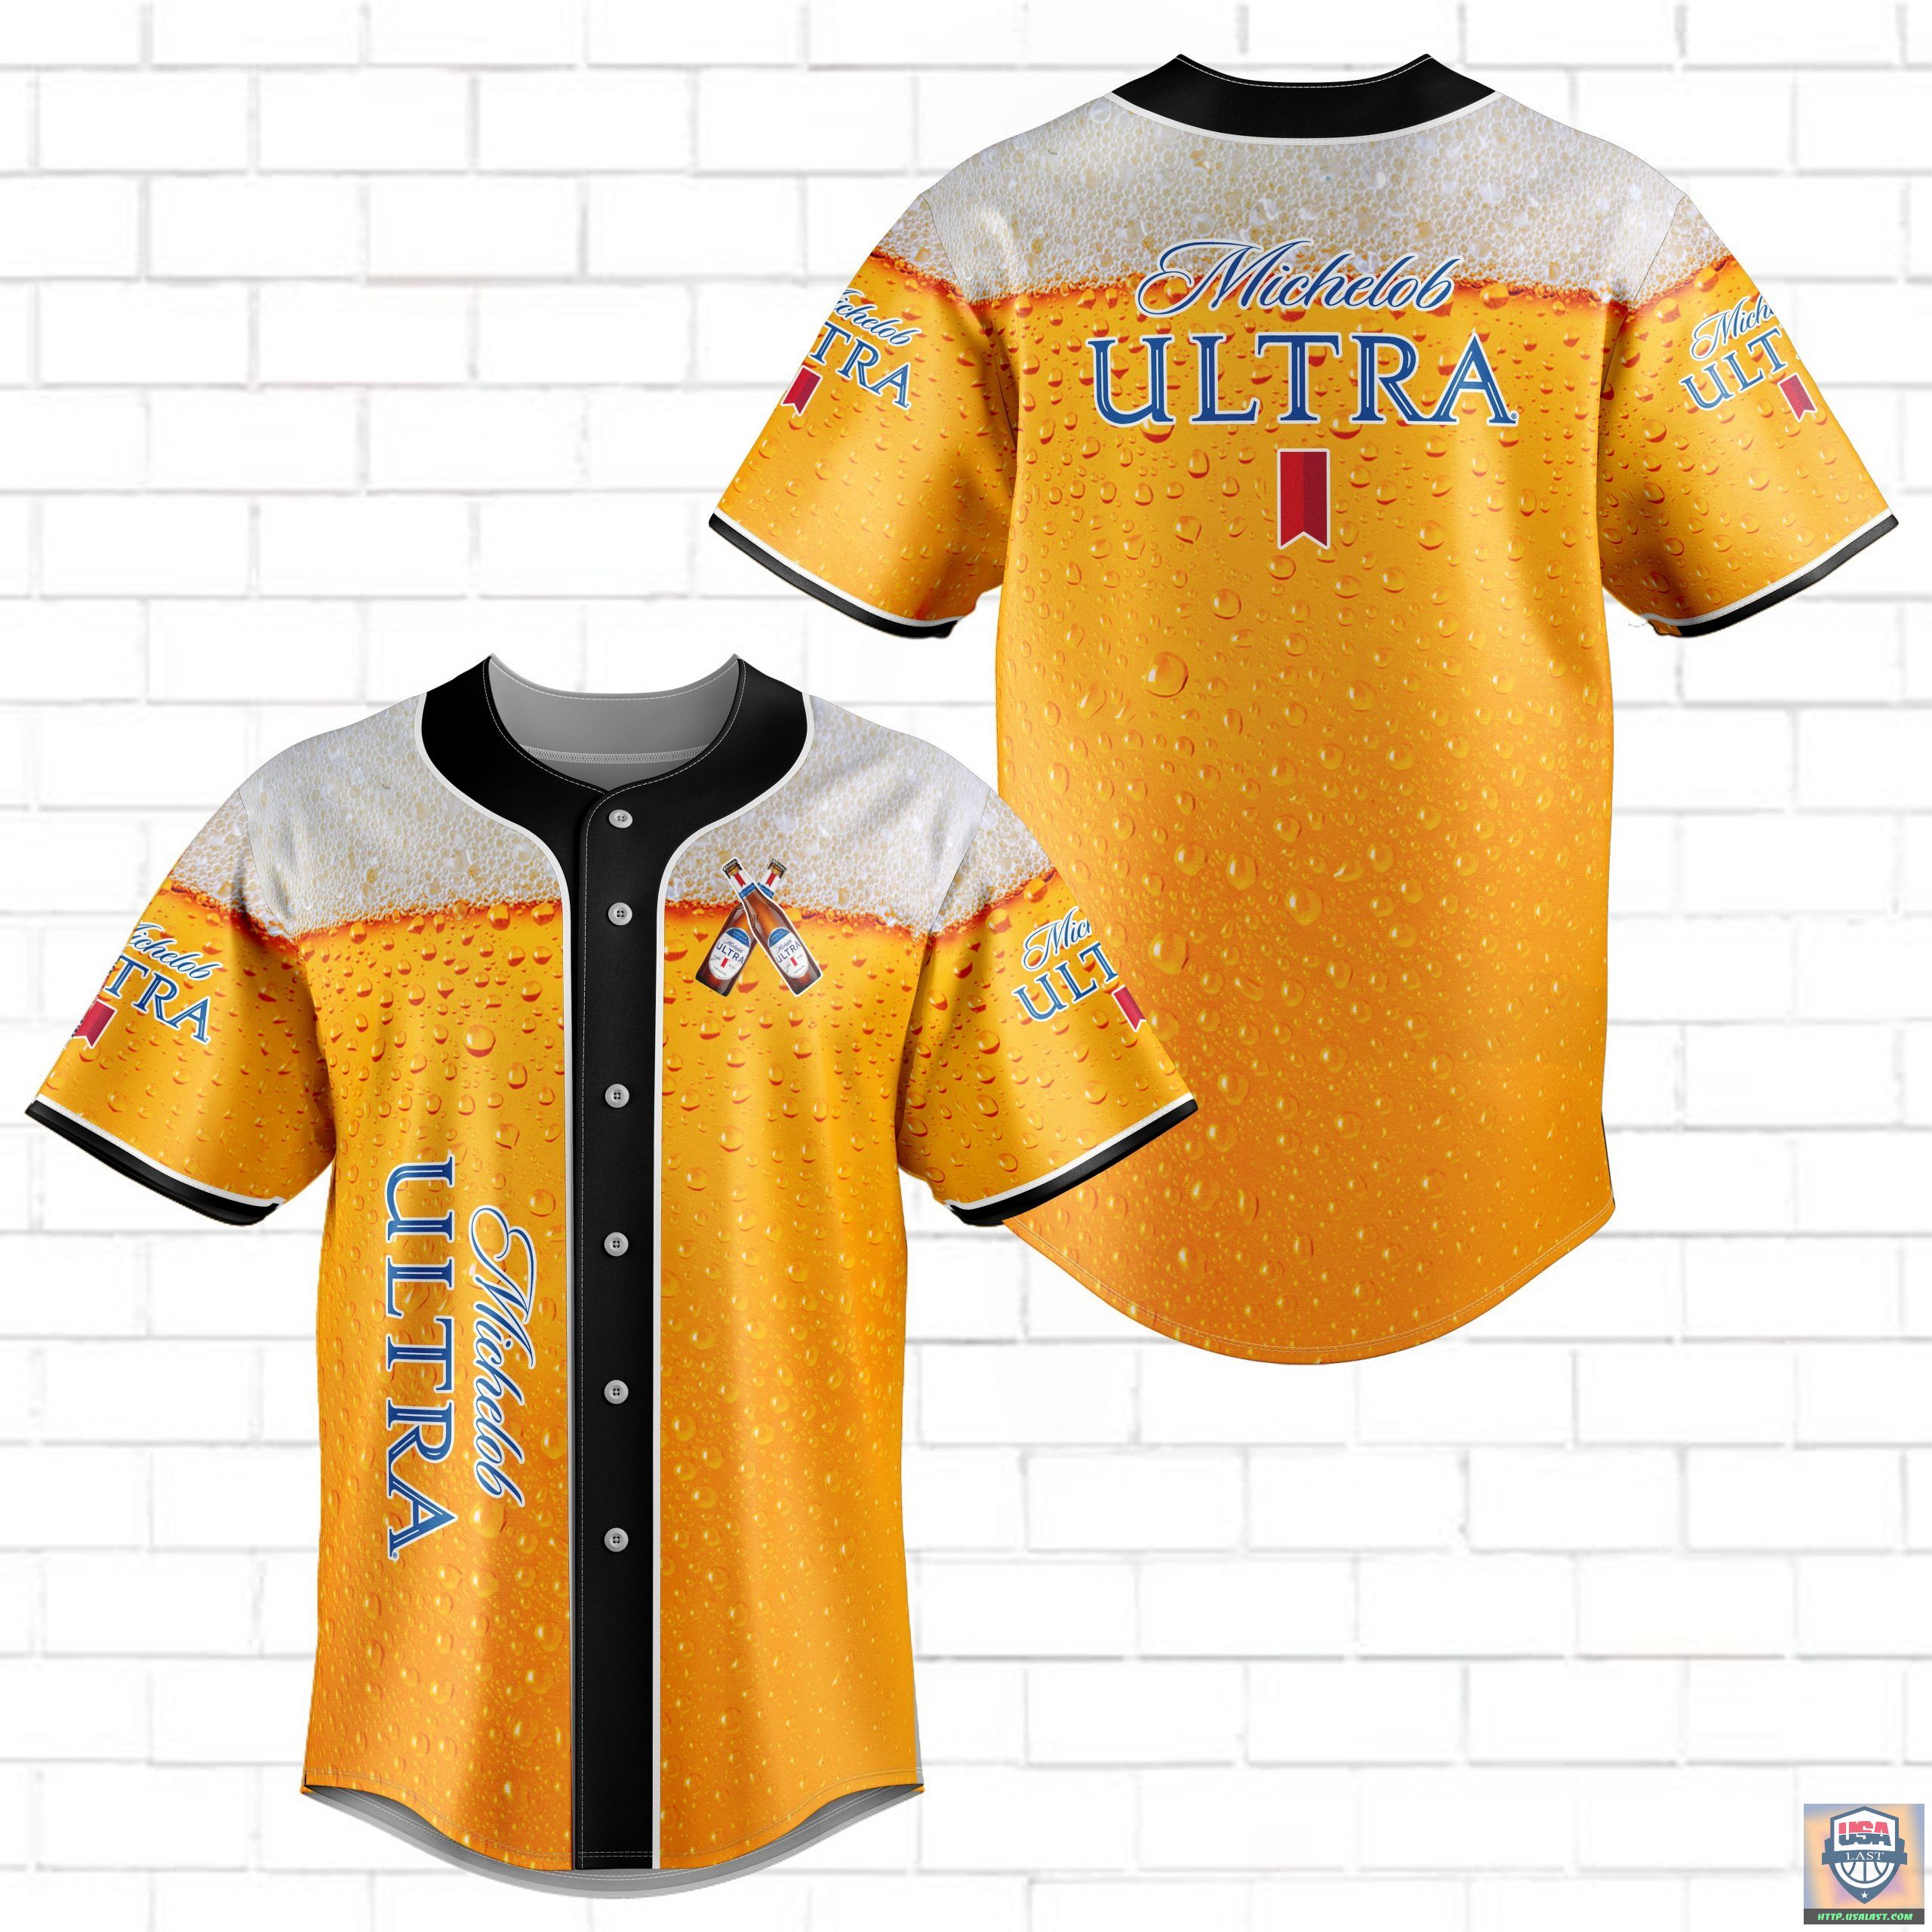 DbBP88he-T200722-73xxxMichelob-Ultra-Baseball-Jersey-Shirt-2022.jpg